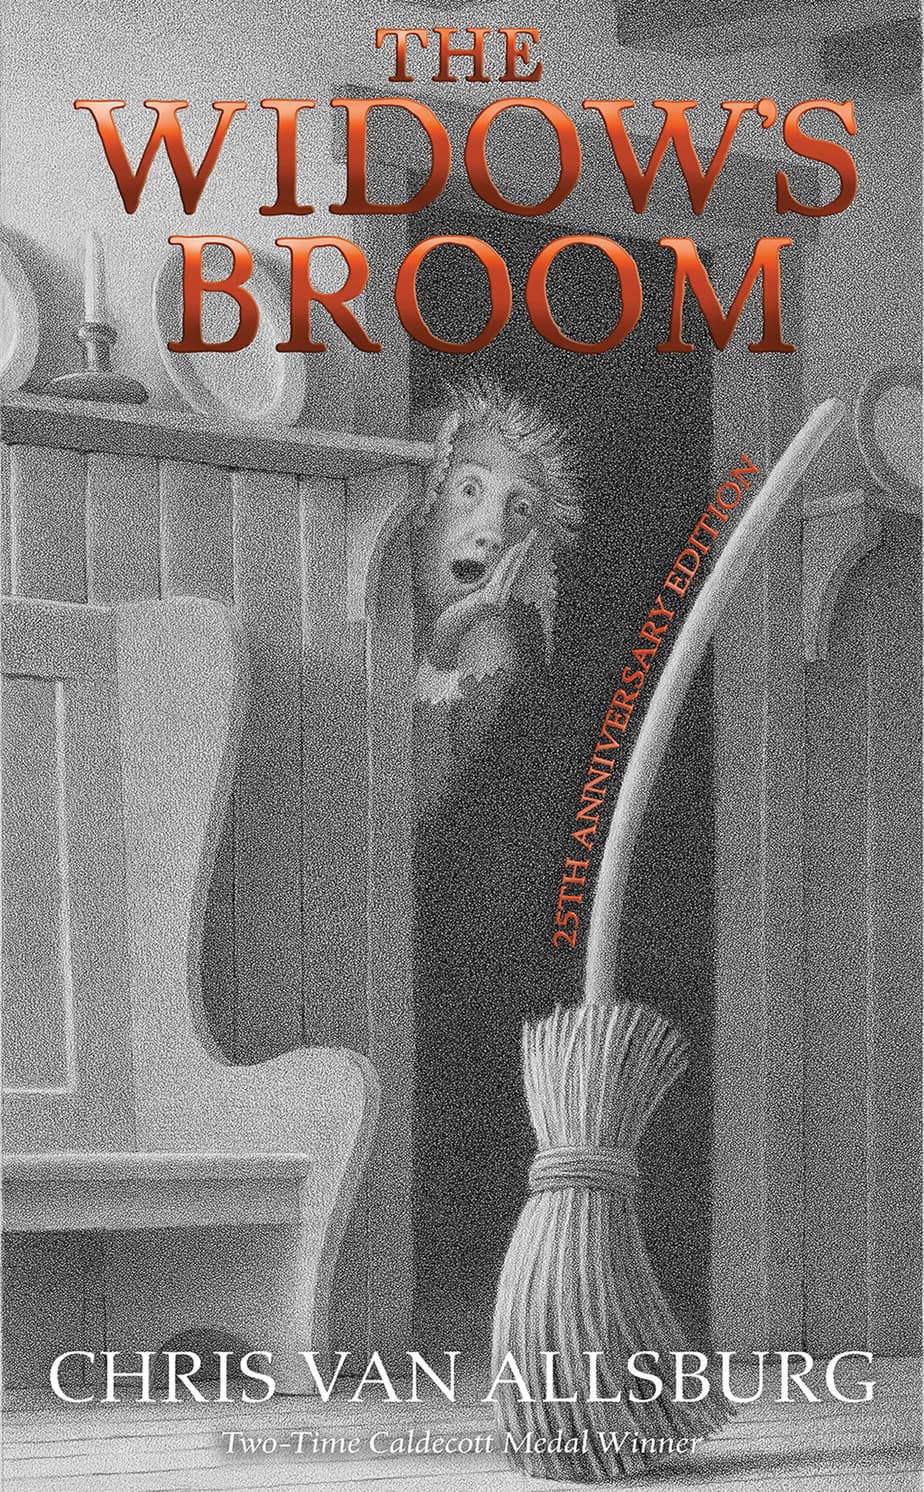 The Widow’s Broom by Chris Van Allsburg Picturebook Analysis